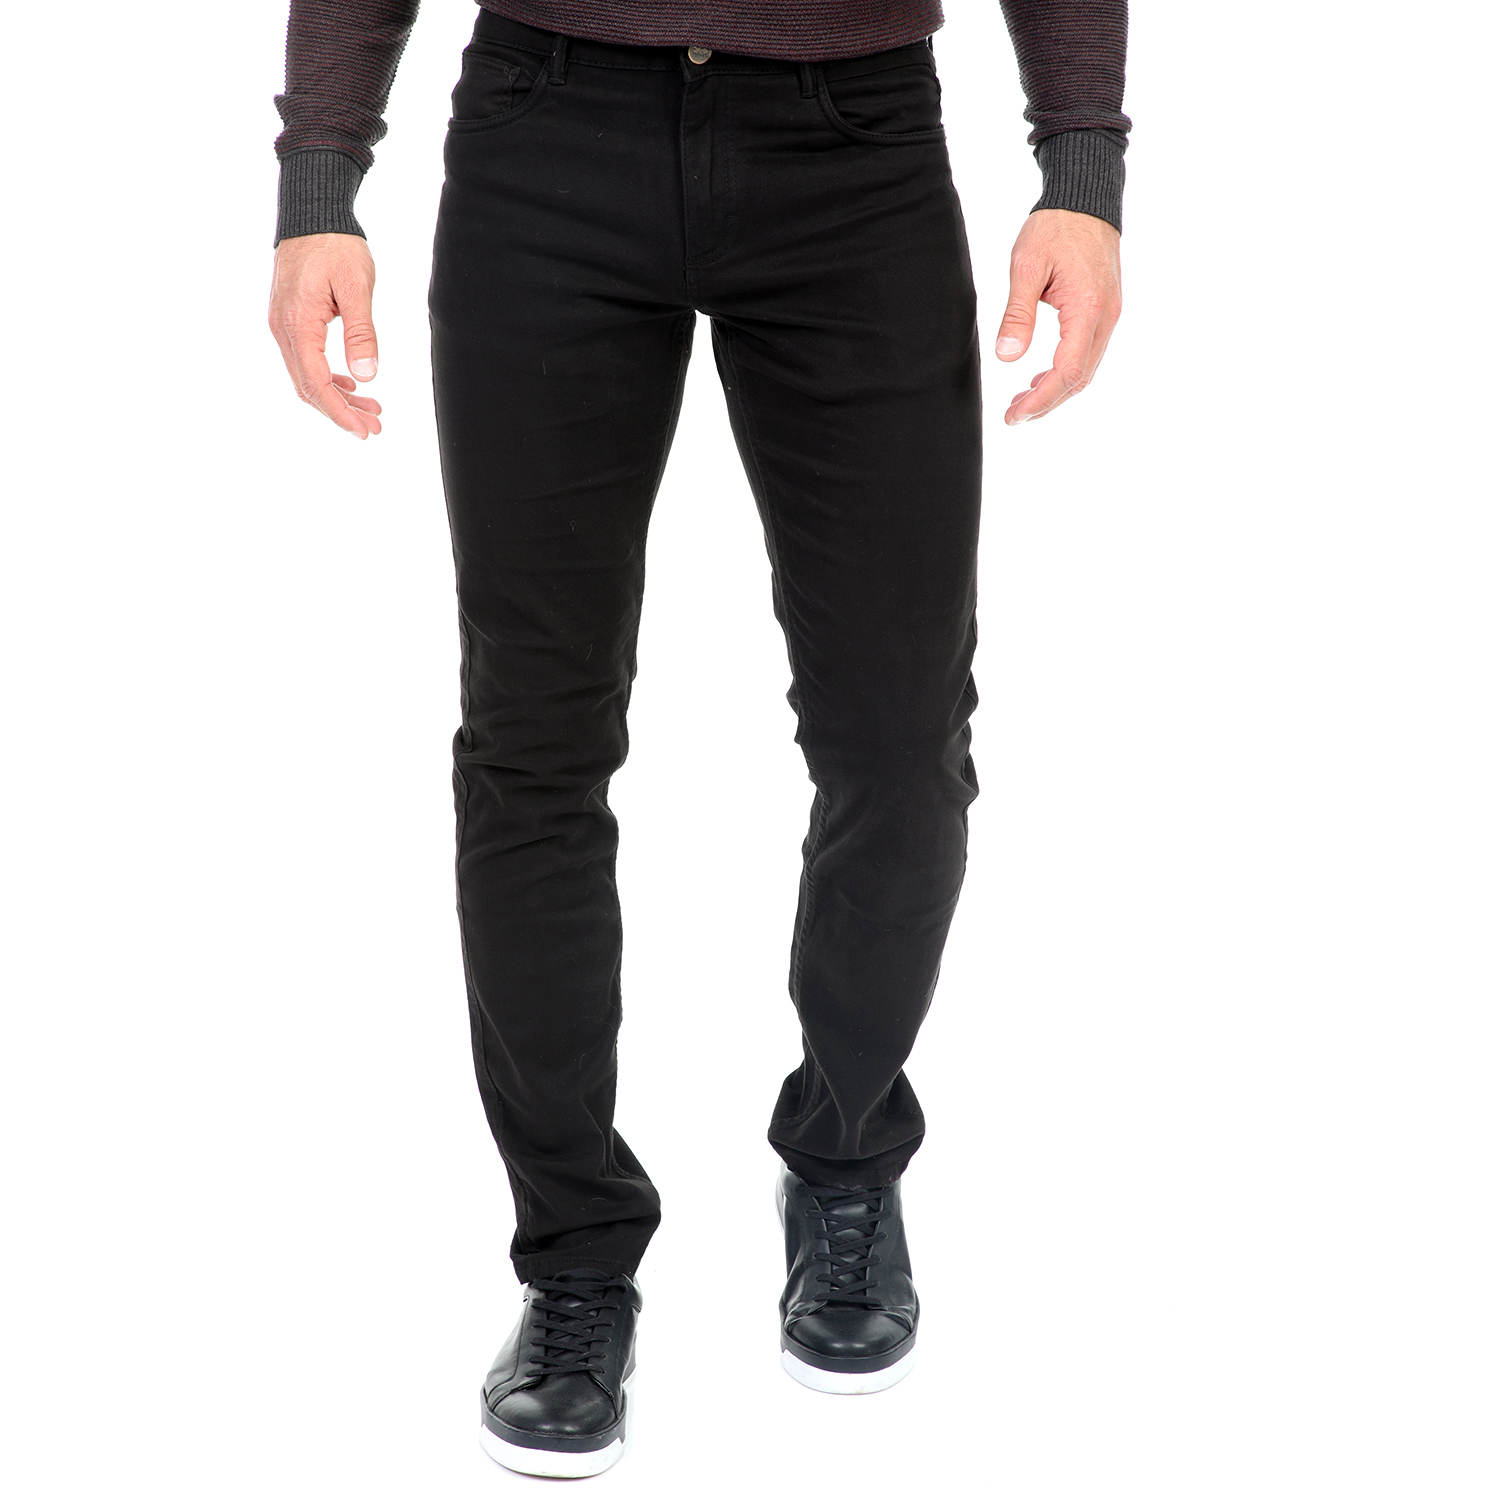 GREENWOOD - Ανδρικό υφασμάτινο παντελόνι GREENWOOD μαύρο Ανδρικά/Ρούχα/Παντελόνια/Ισια Γραμμή